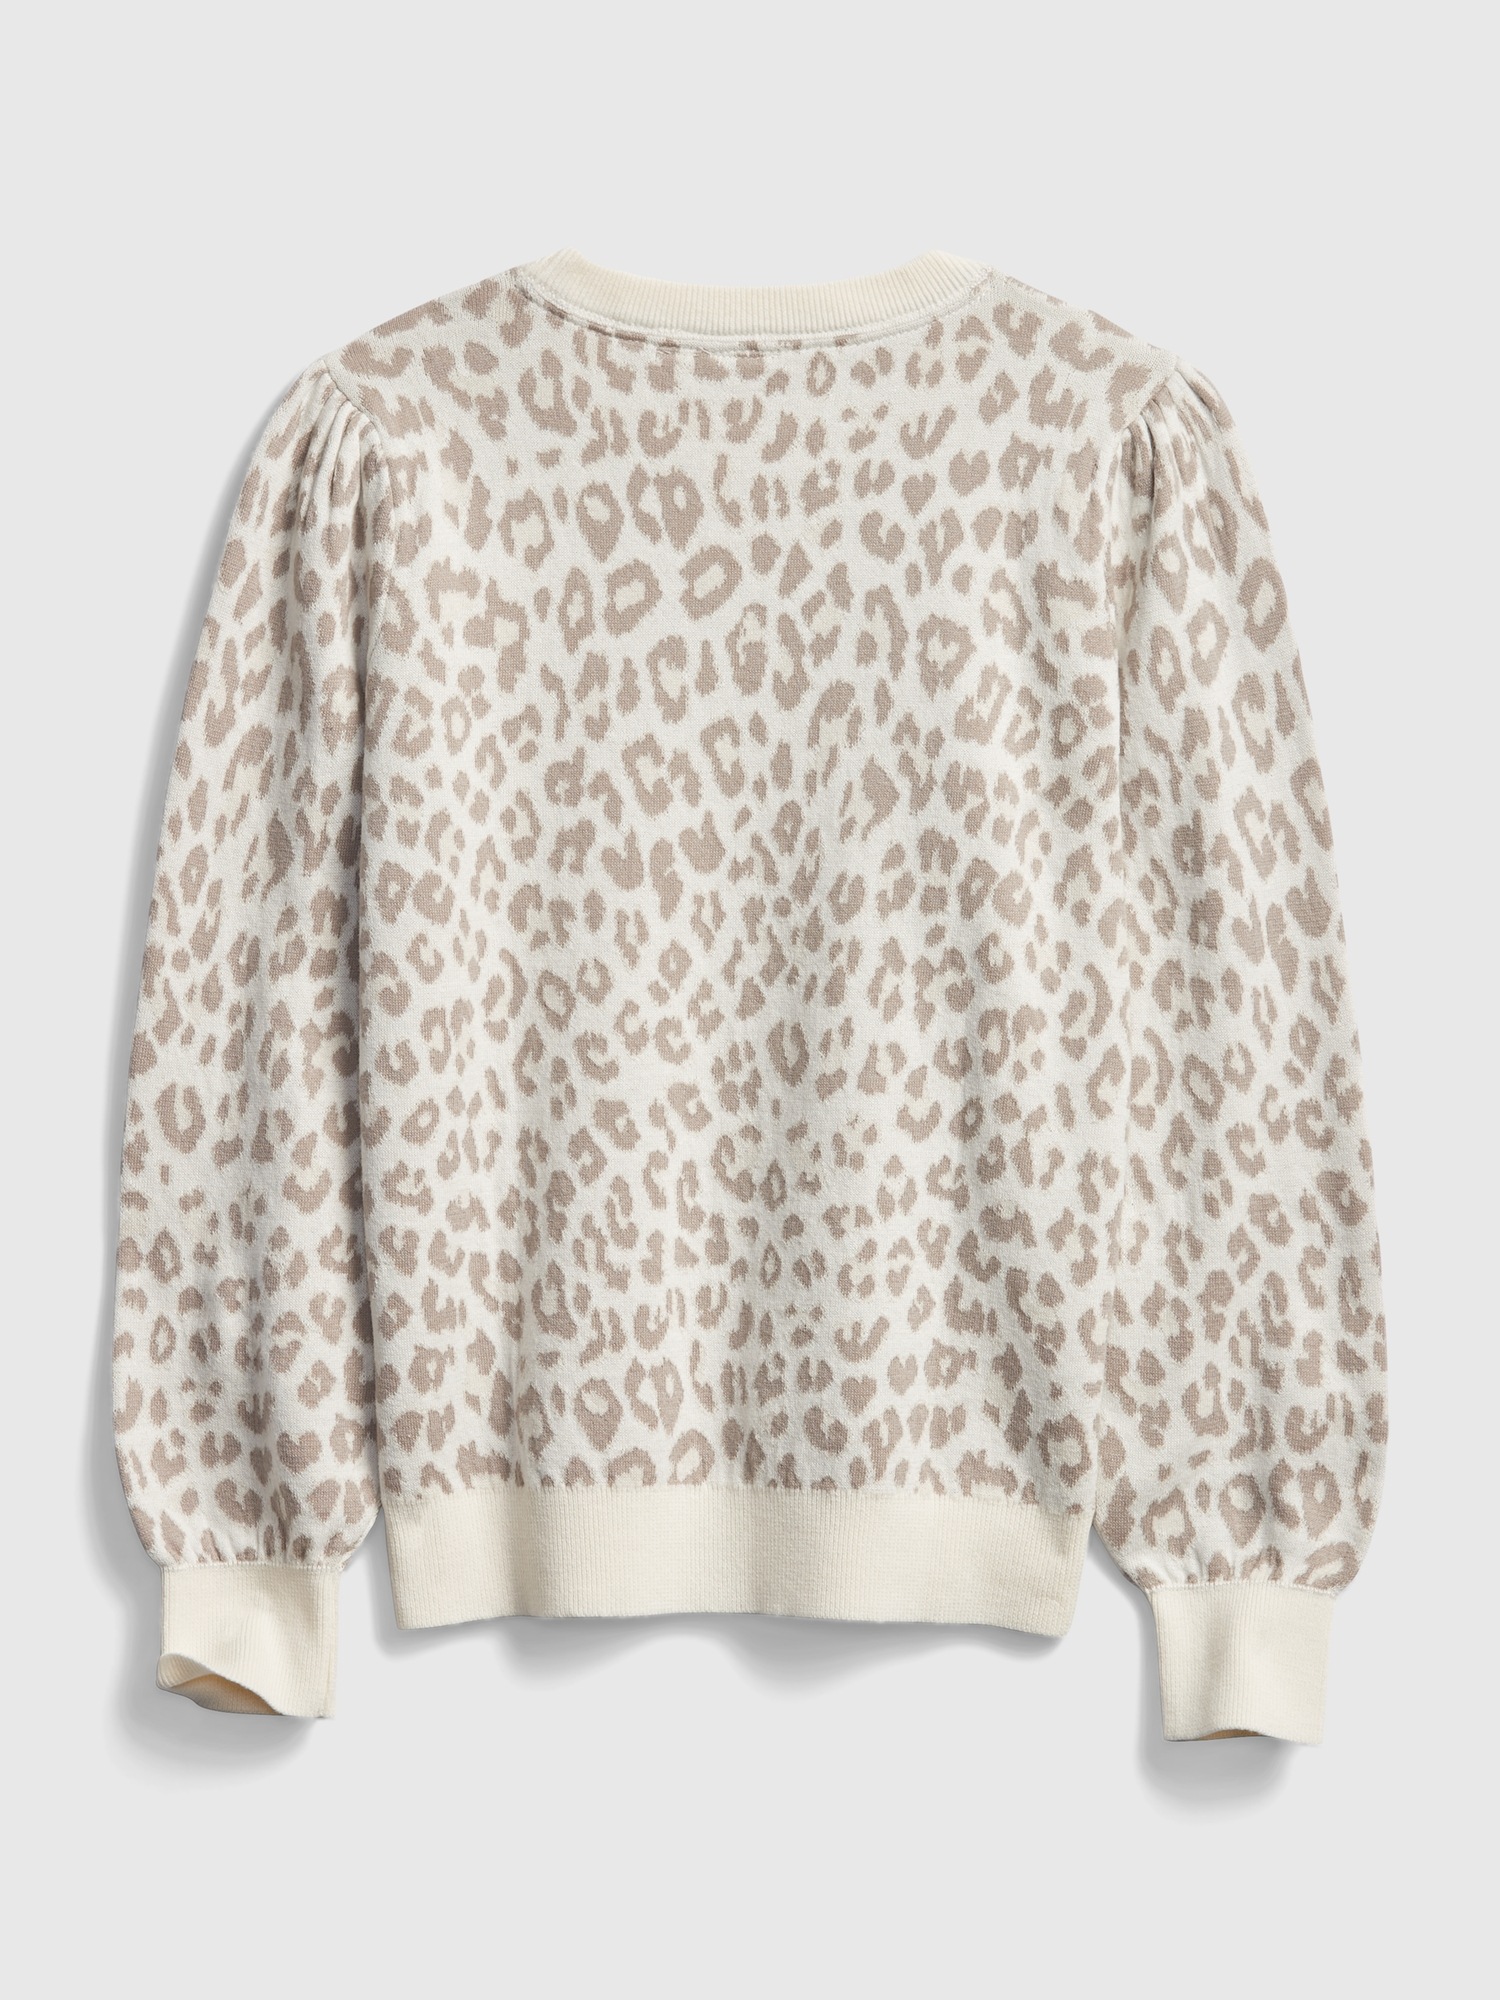 Kids Leopard Print Crewneck Sweater | Gap